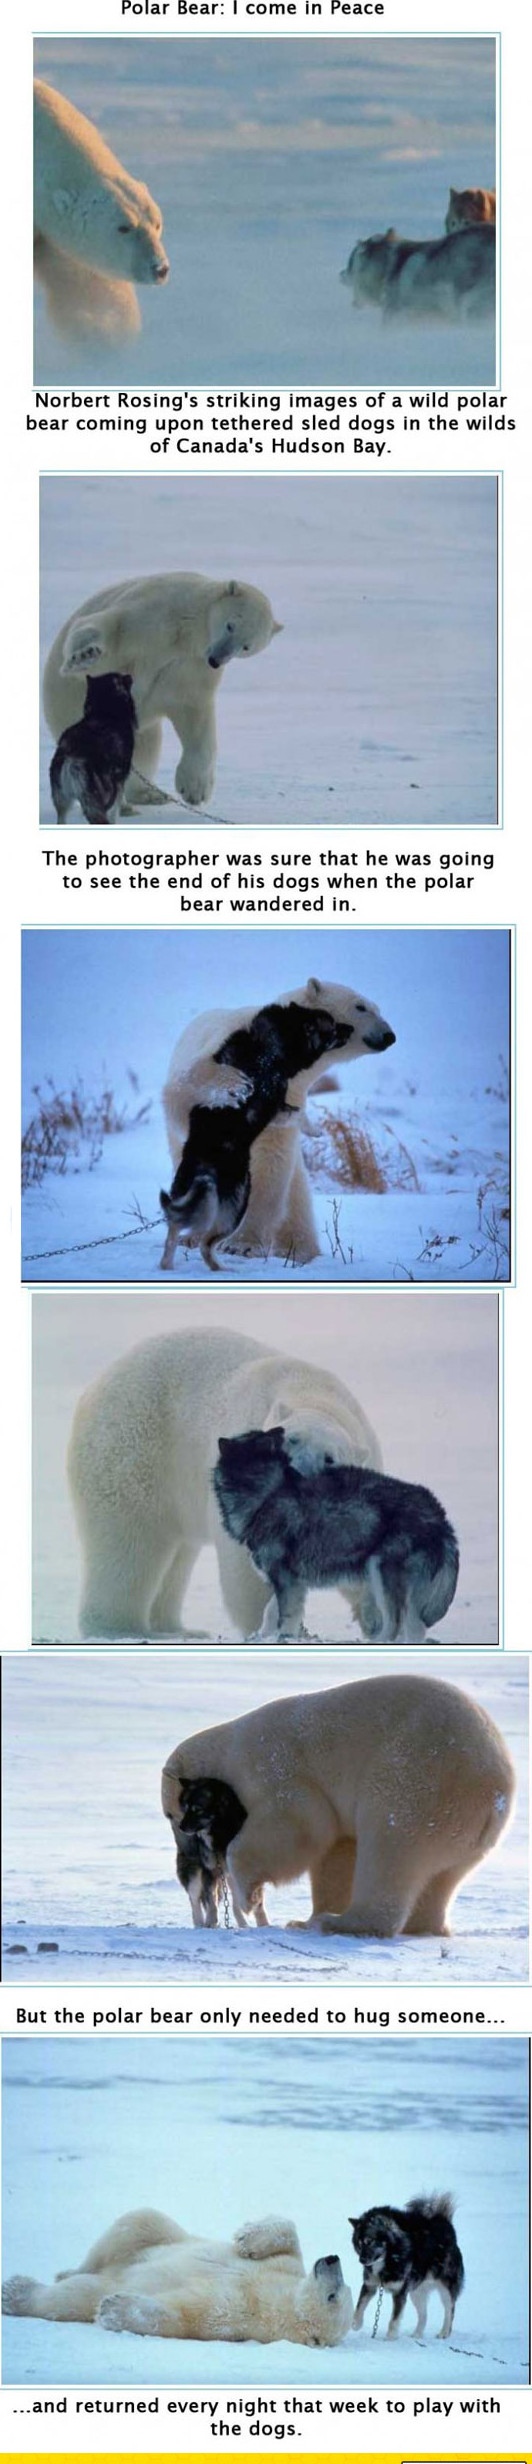 cute-polar-bear-playing-husky-dogs-ice